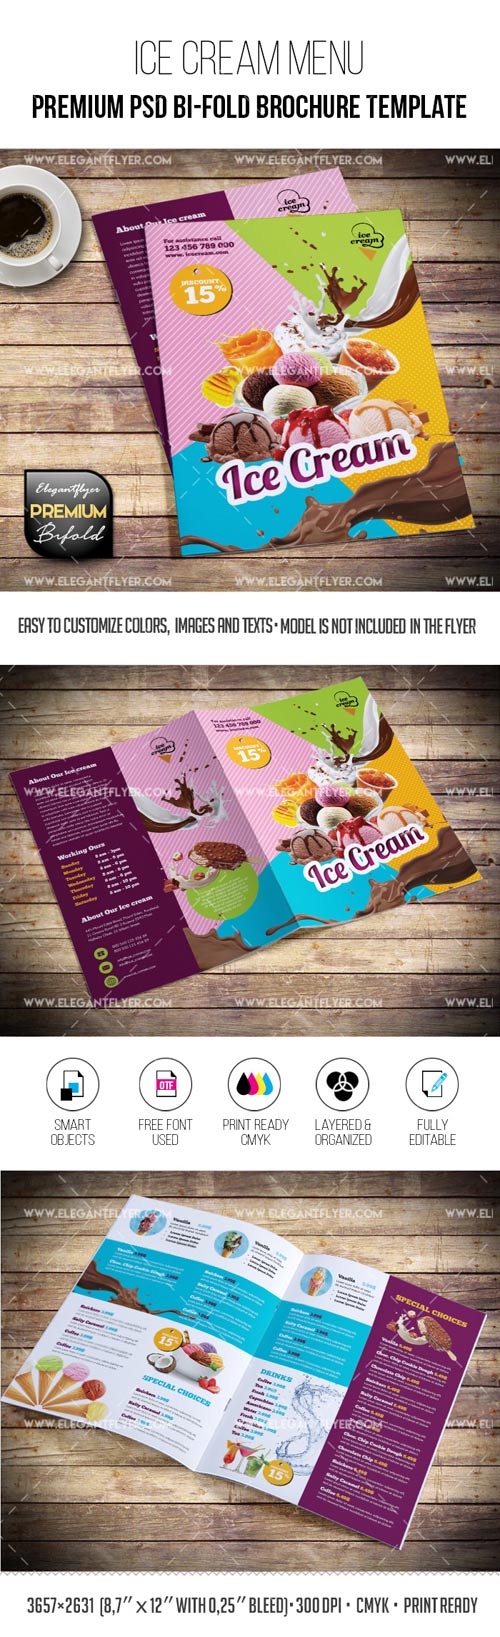 Ice Cream Menu Premium PSD Bi-Fold Brochure Template